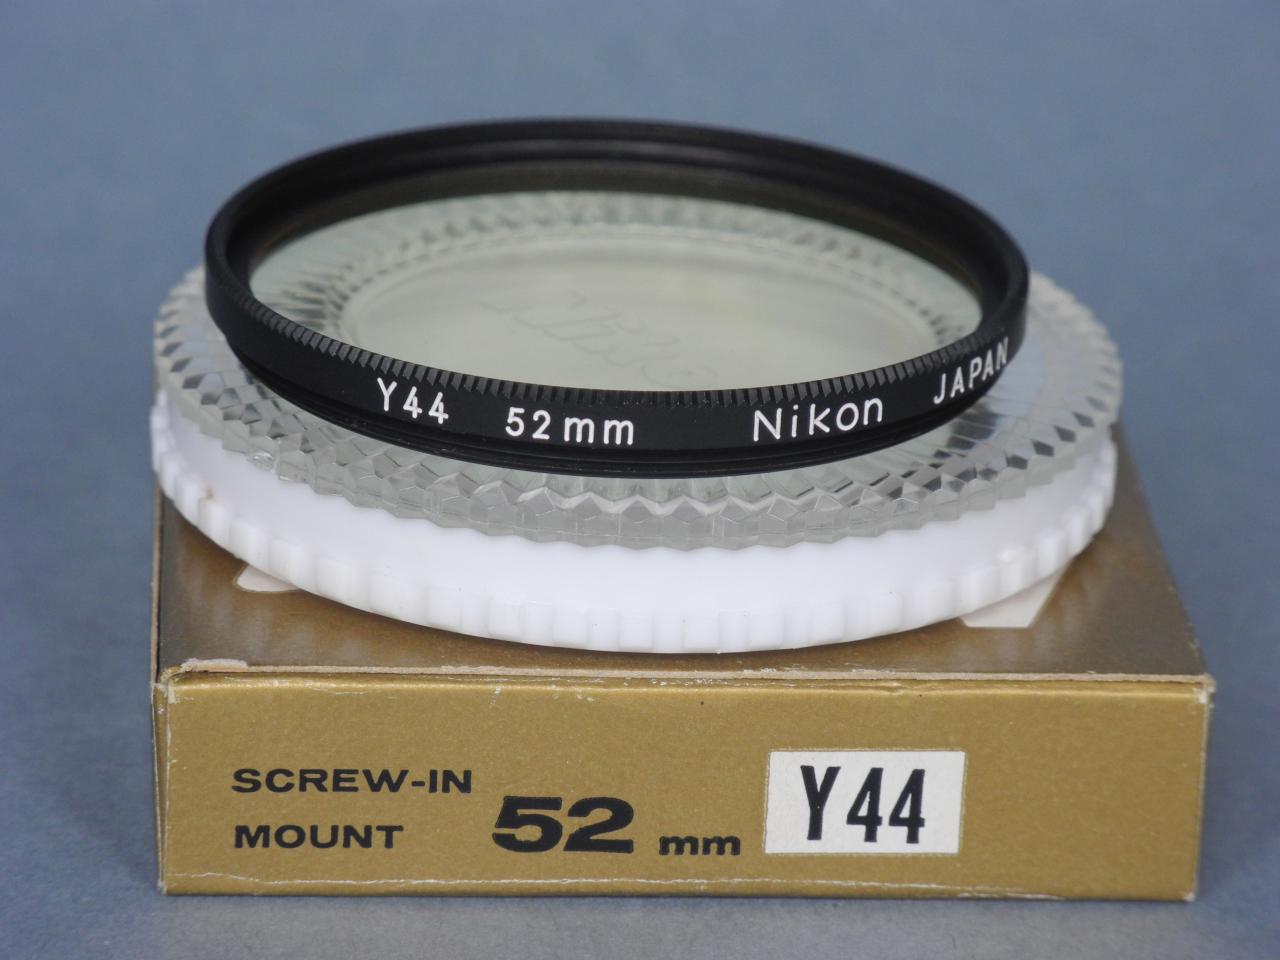 *Nikon SCREW-IN MOUNT Y44 52mm*